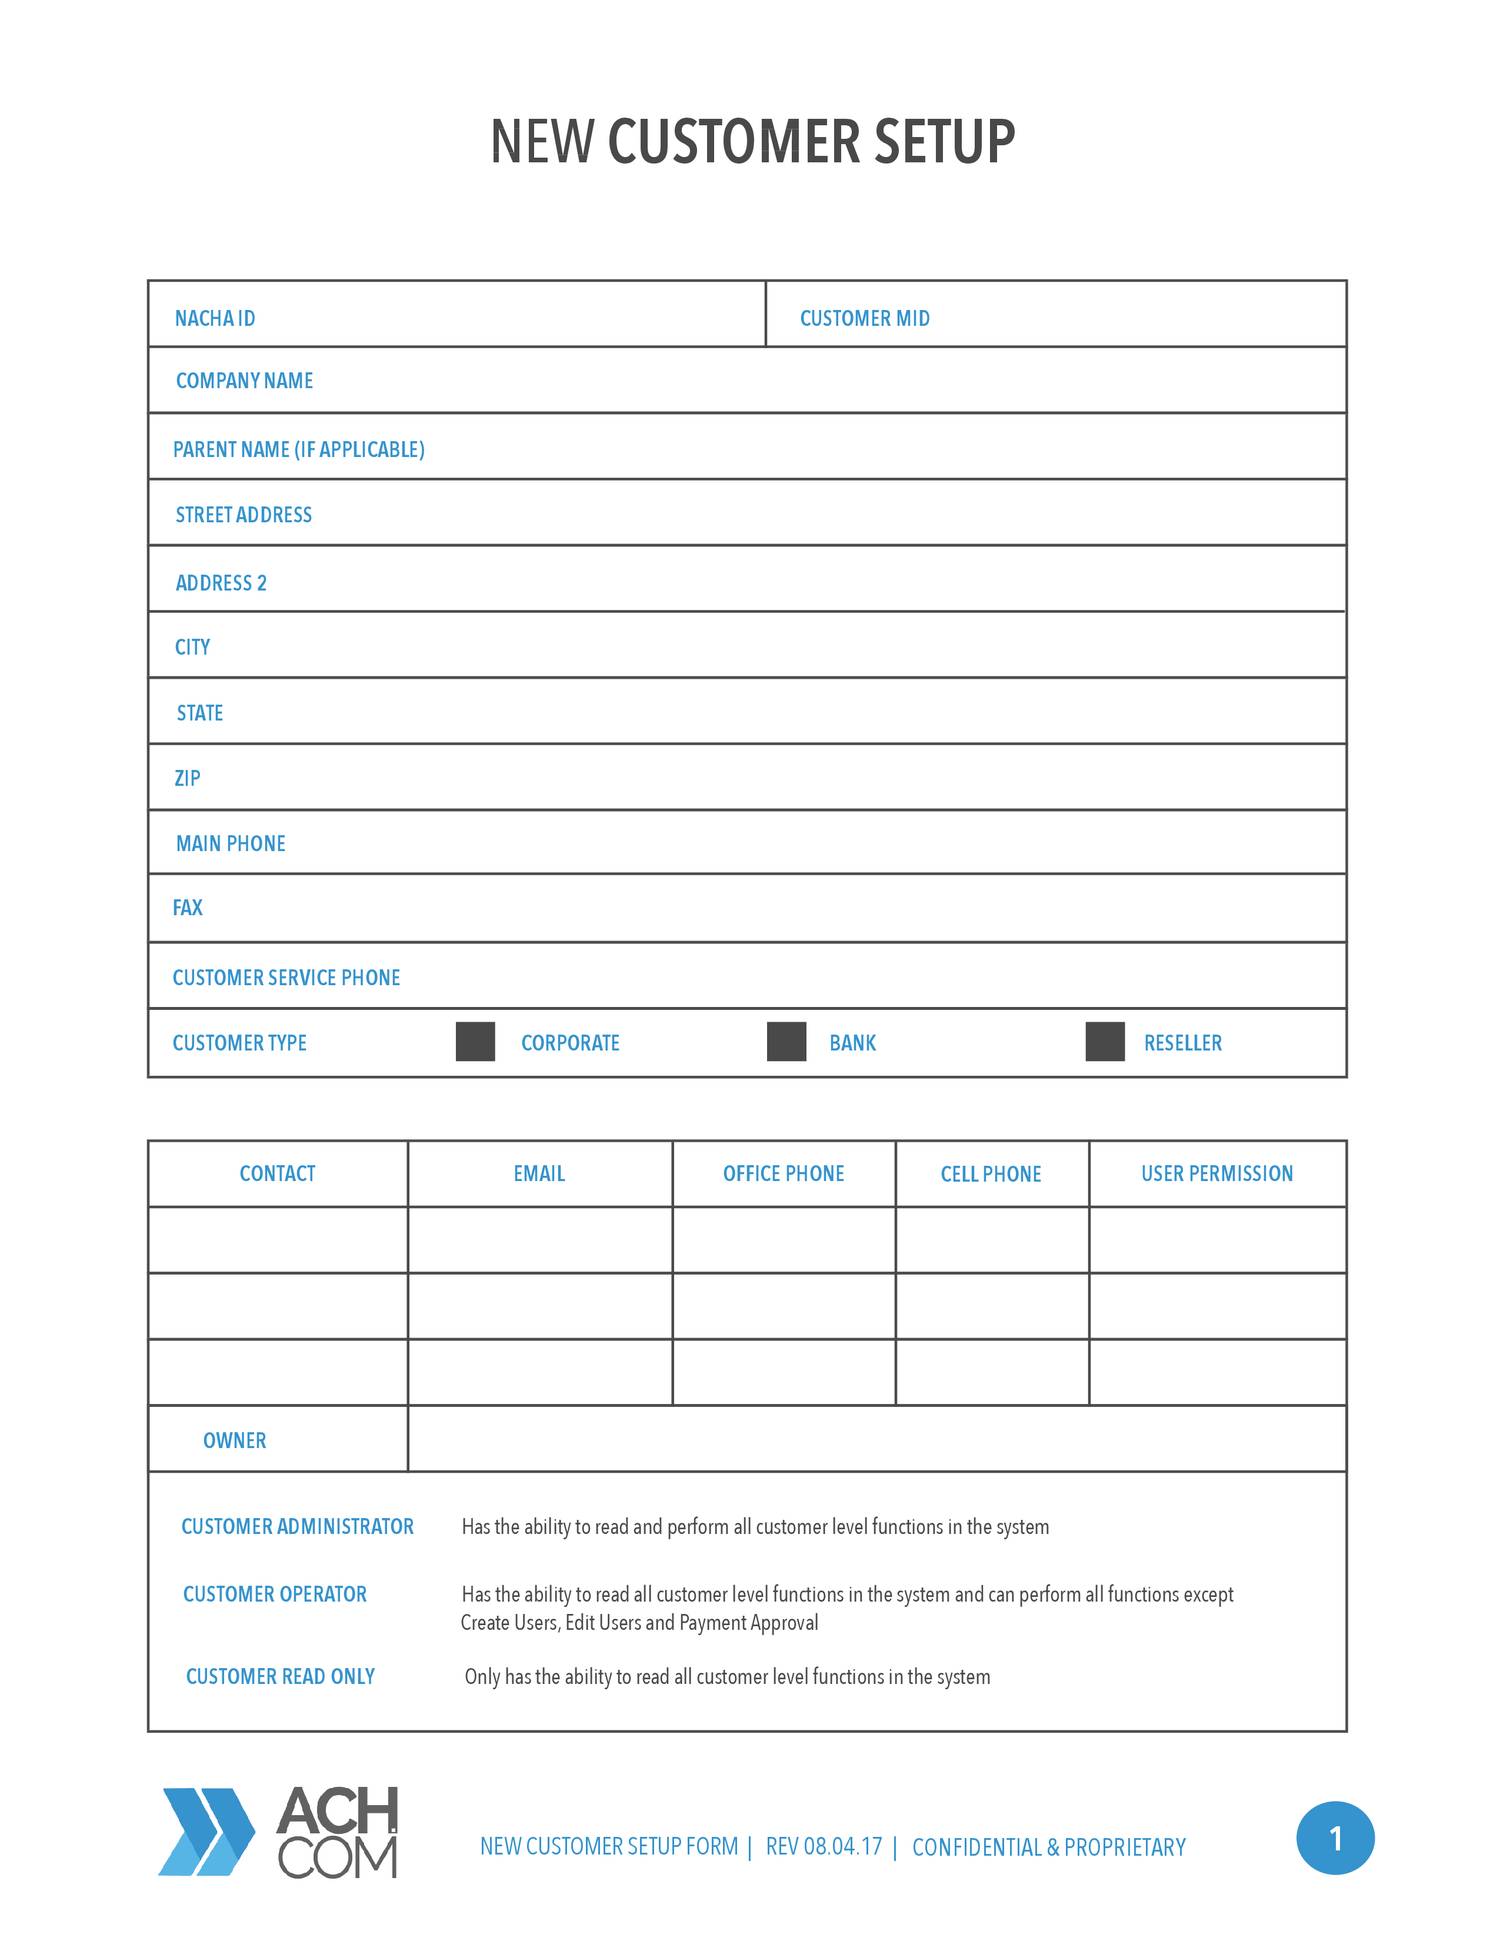 ACH New Customer Setup Form pdf DocDroid